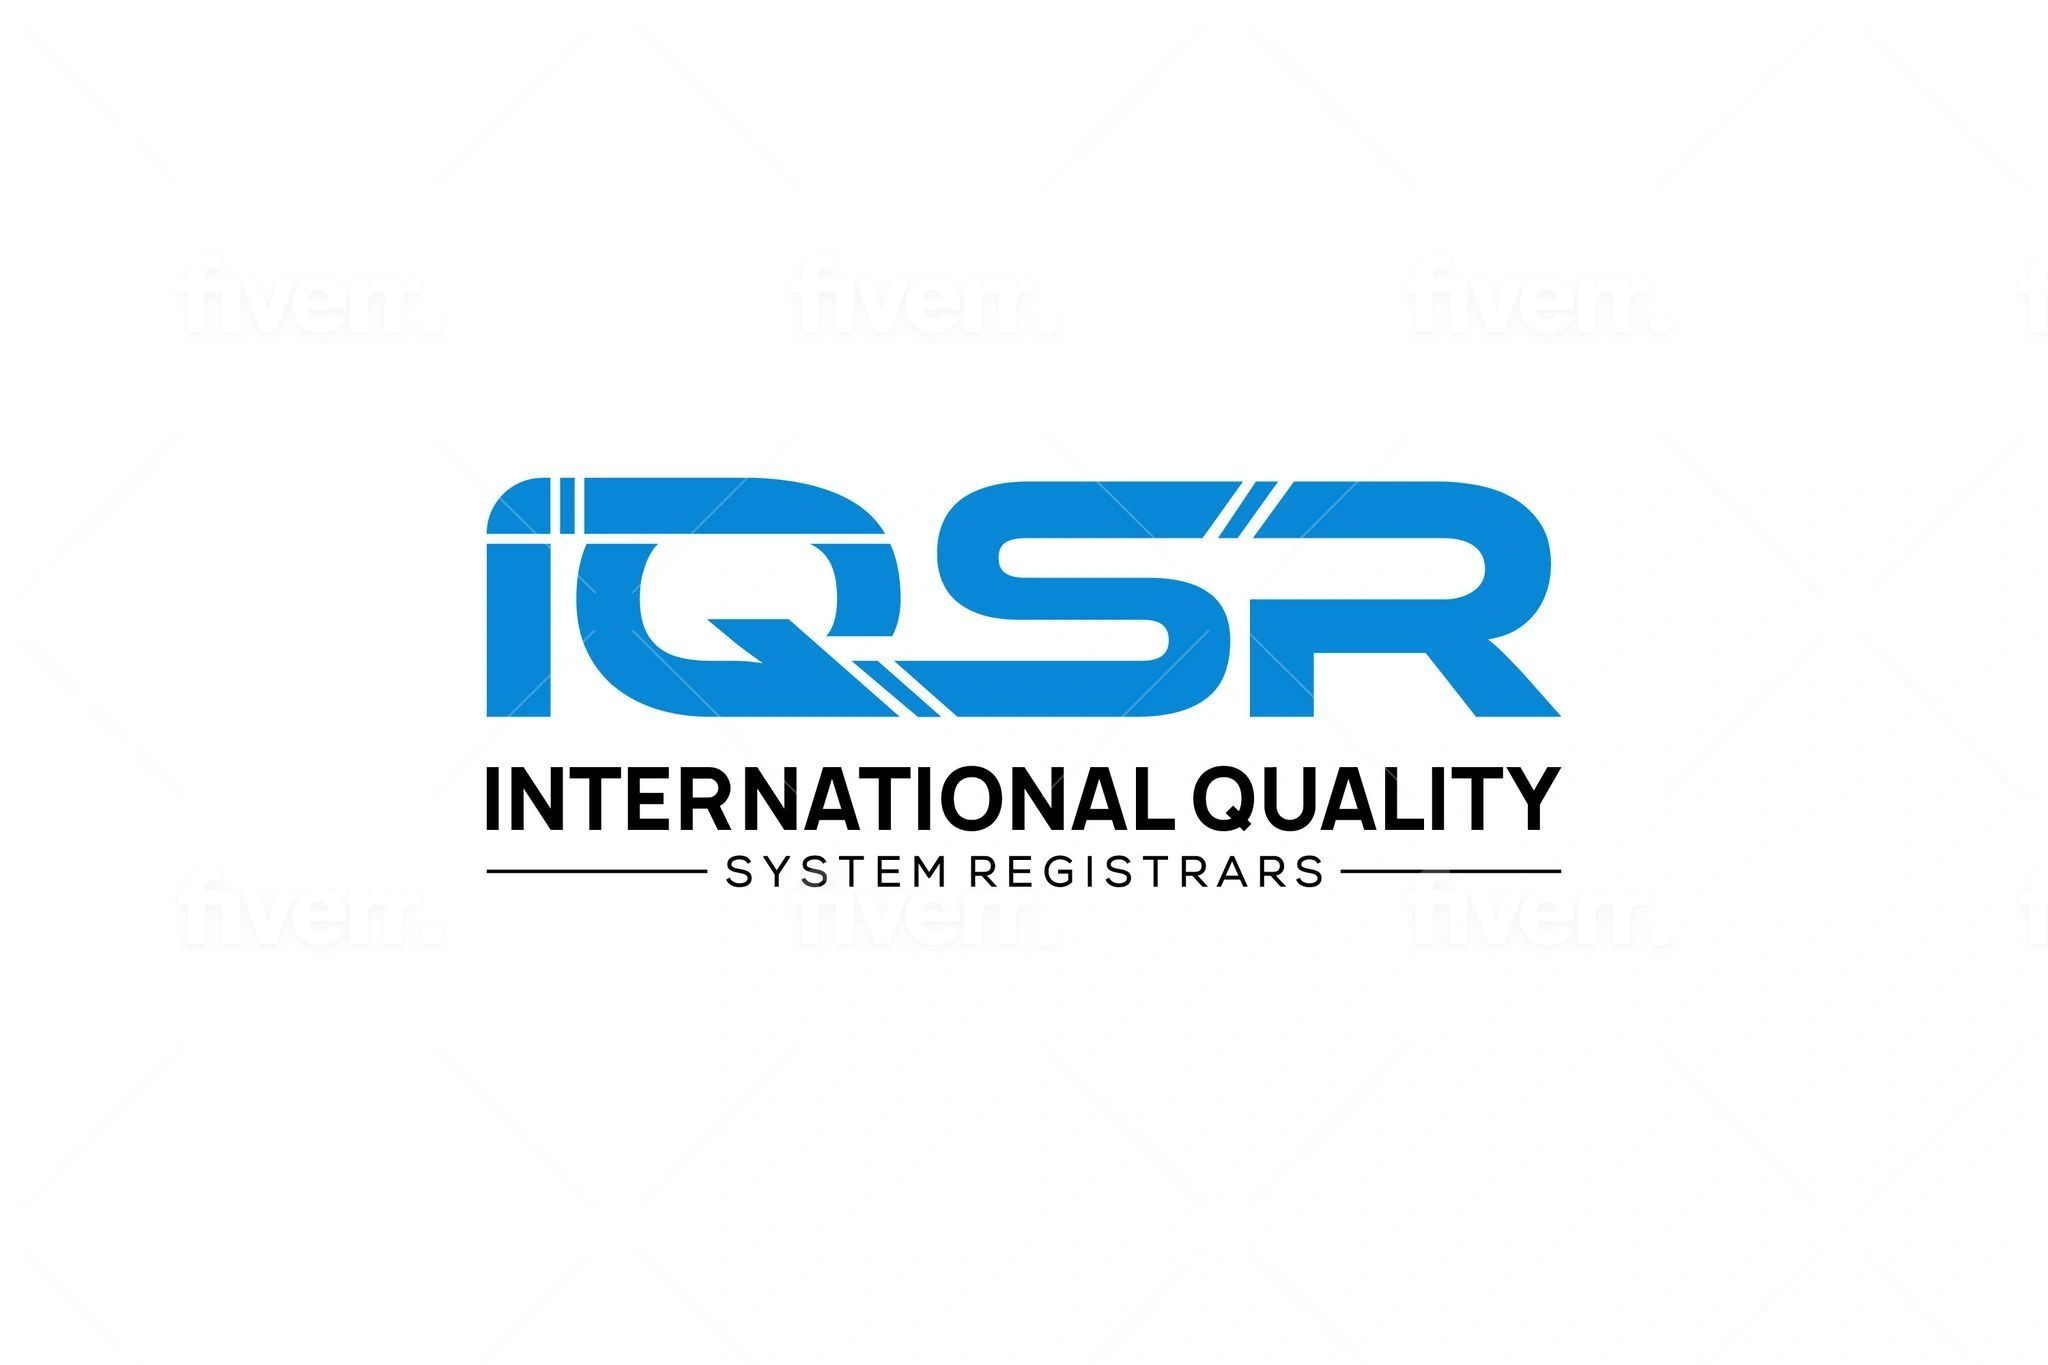 Use of Logo #39 s Policy International Quality System Registrars